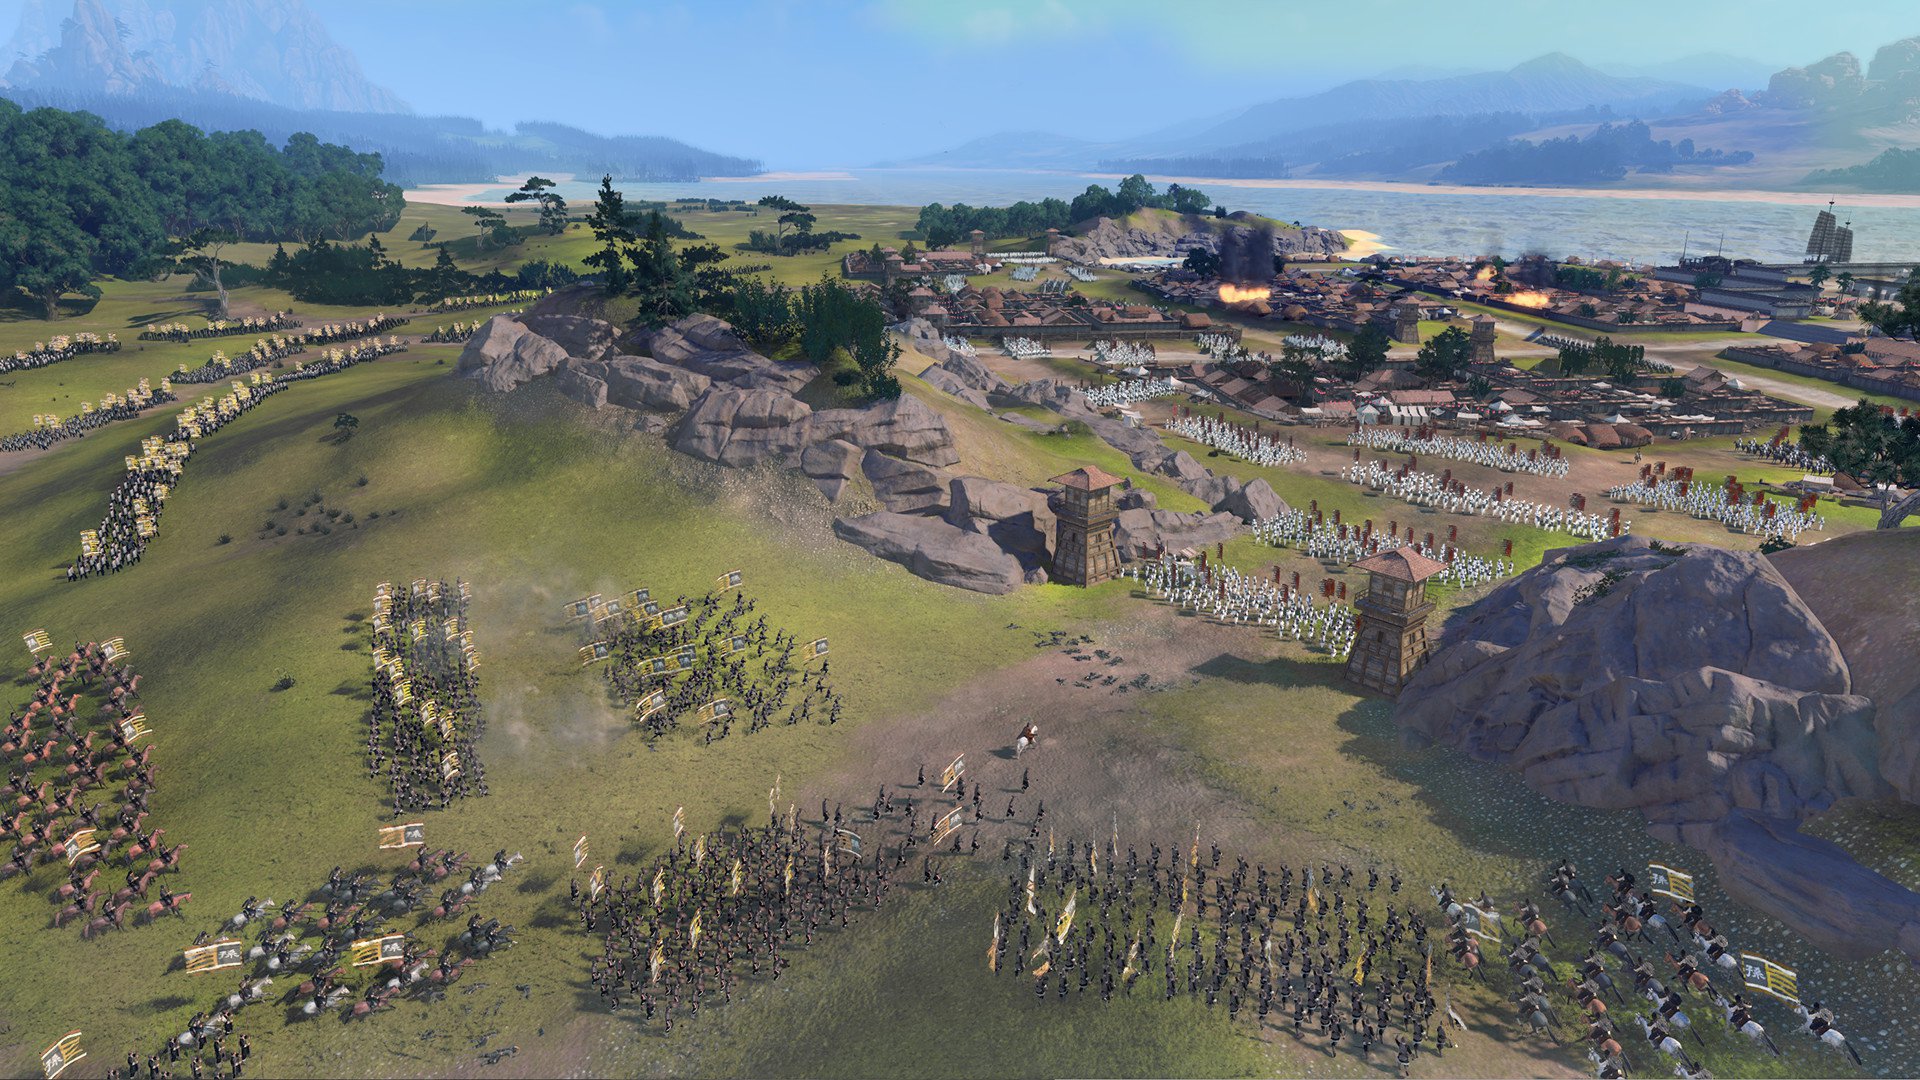 Total War: Three Kingdoms CZ (Royal Edition)[Steam]